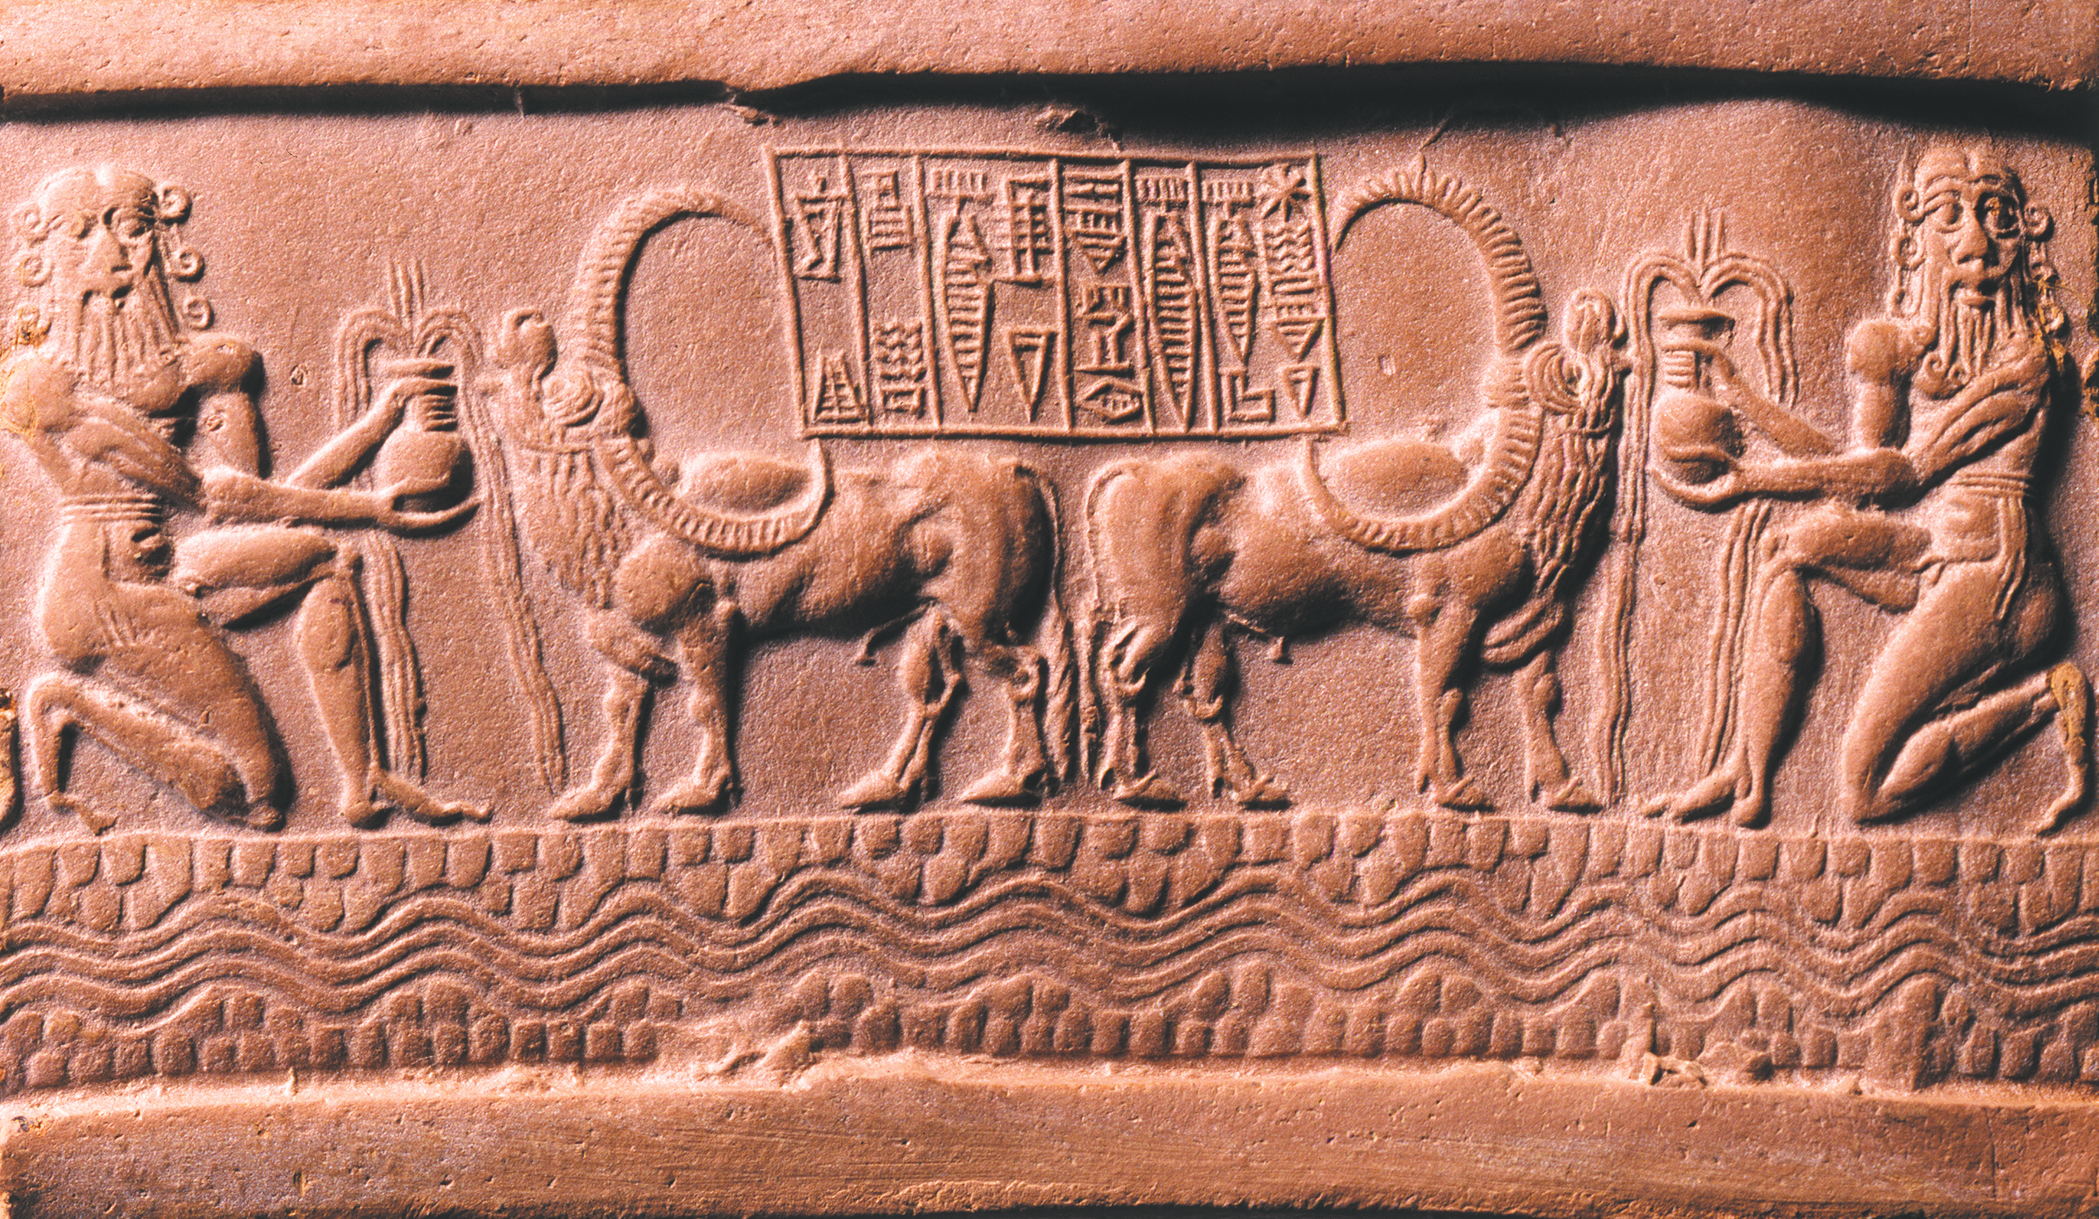 Mesopotamia: Civilization Begins